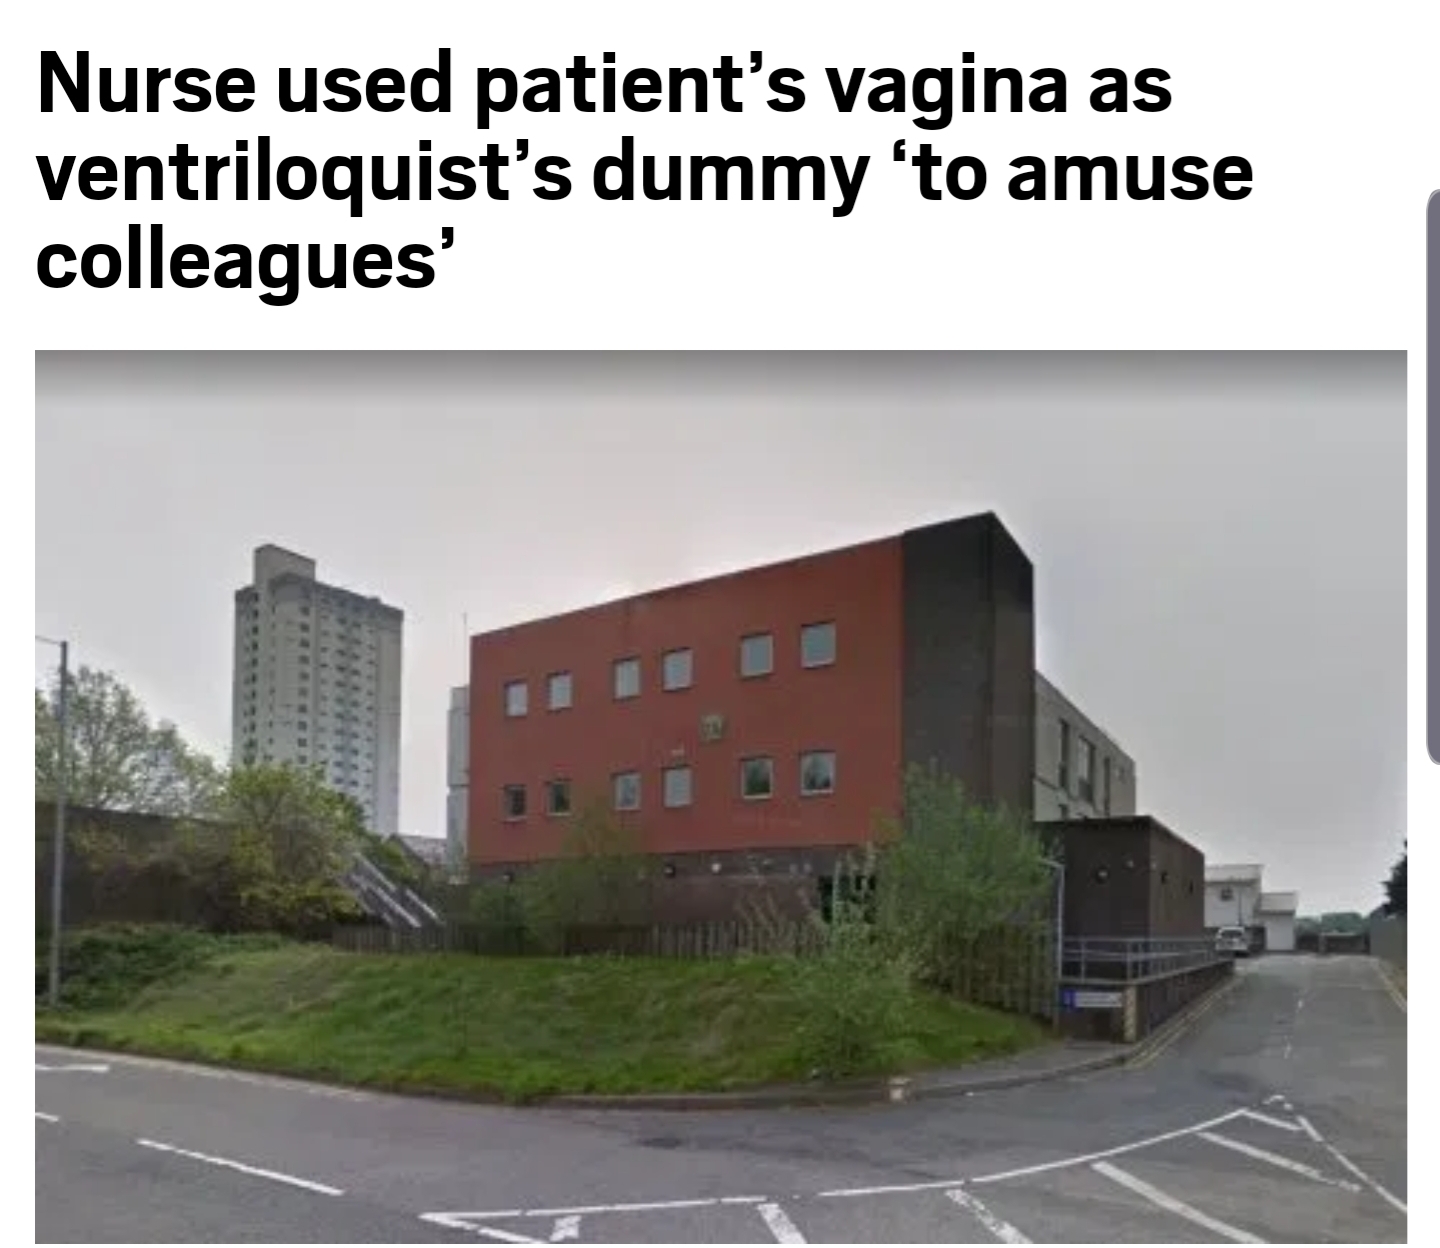 urban design - Nurse used patient's vagina as ventriloquist's dummy 'to amuse colleagues'